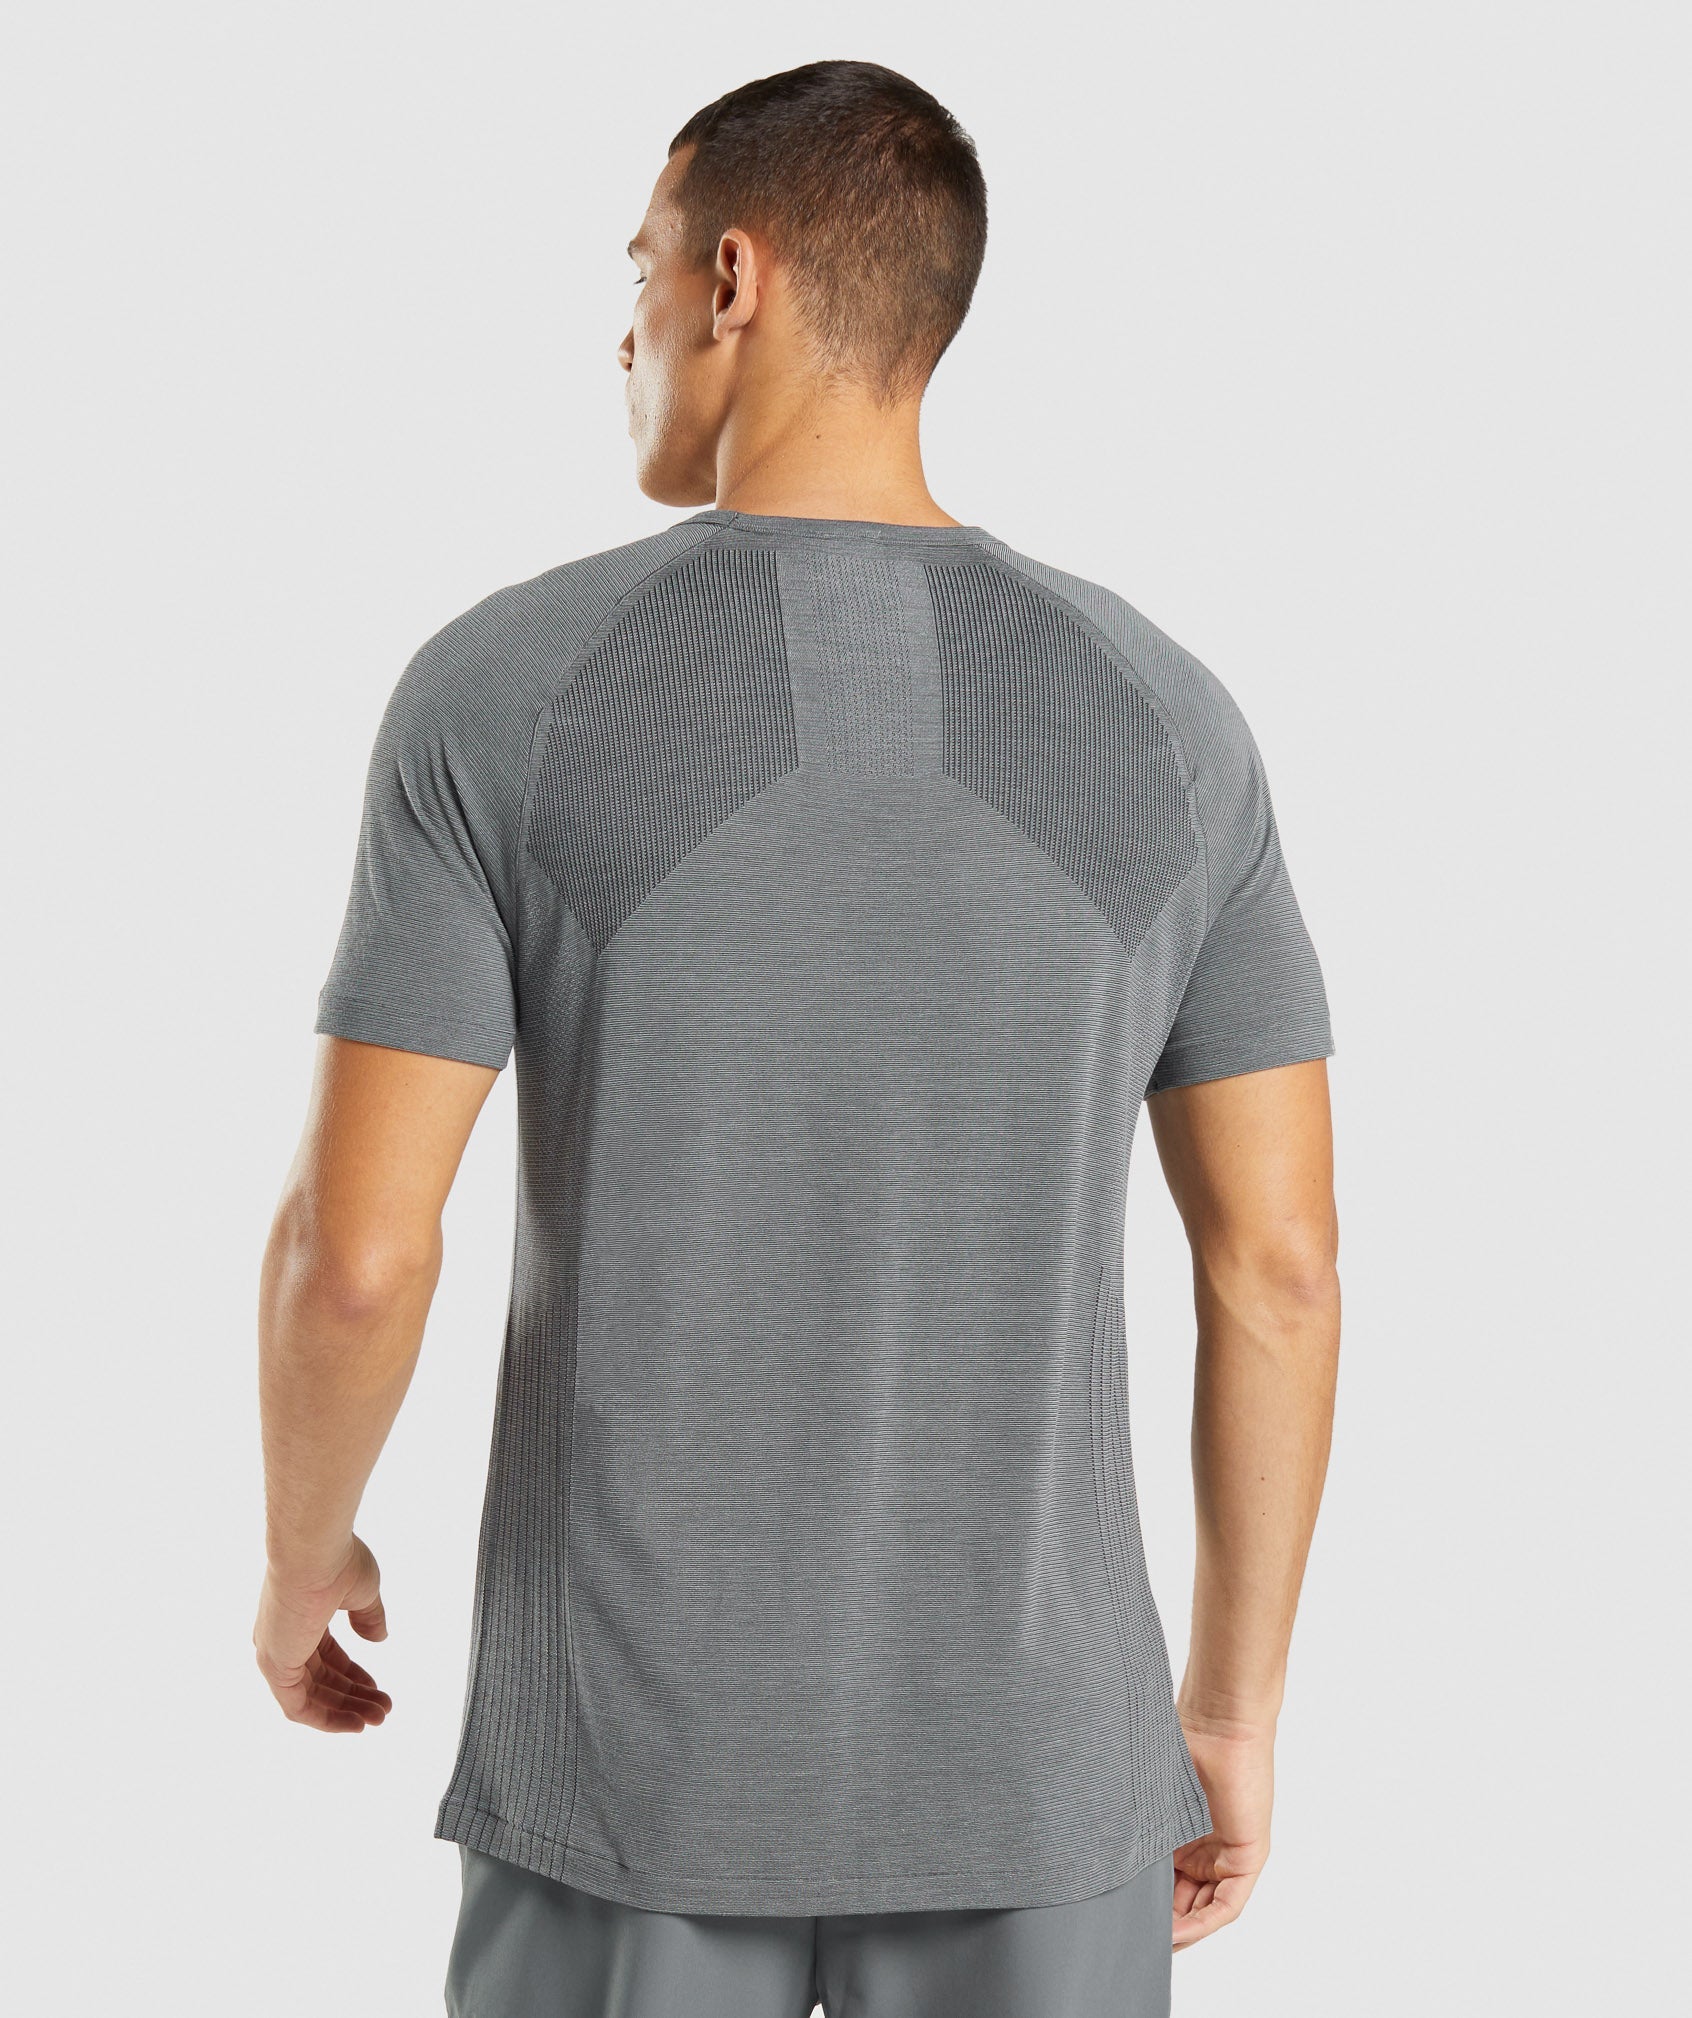 Retake Seamless T-Shirt in Black/Charcoal Marl - view 3